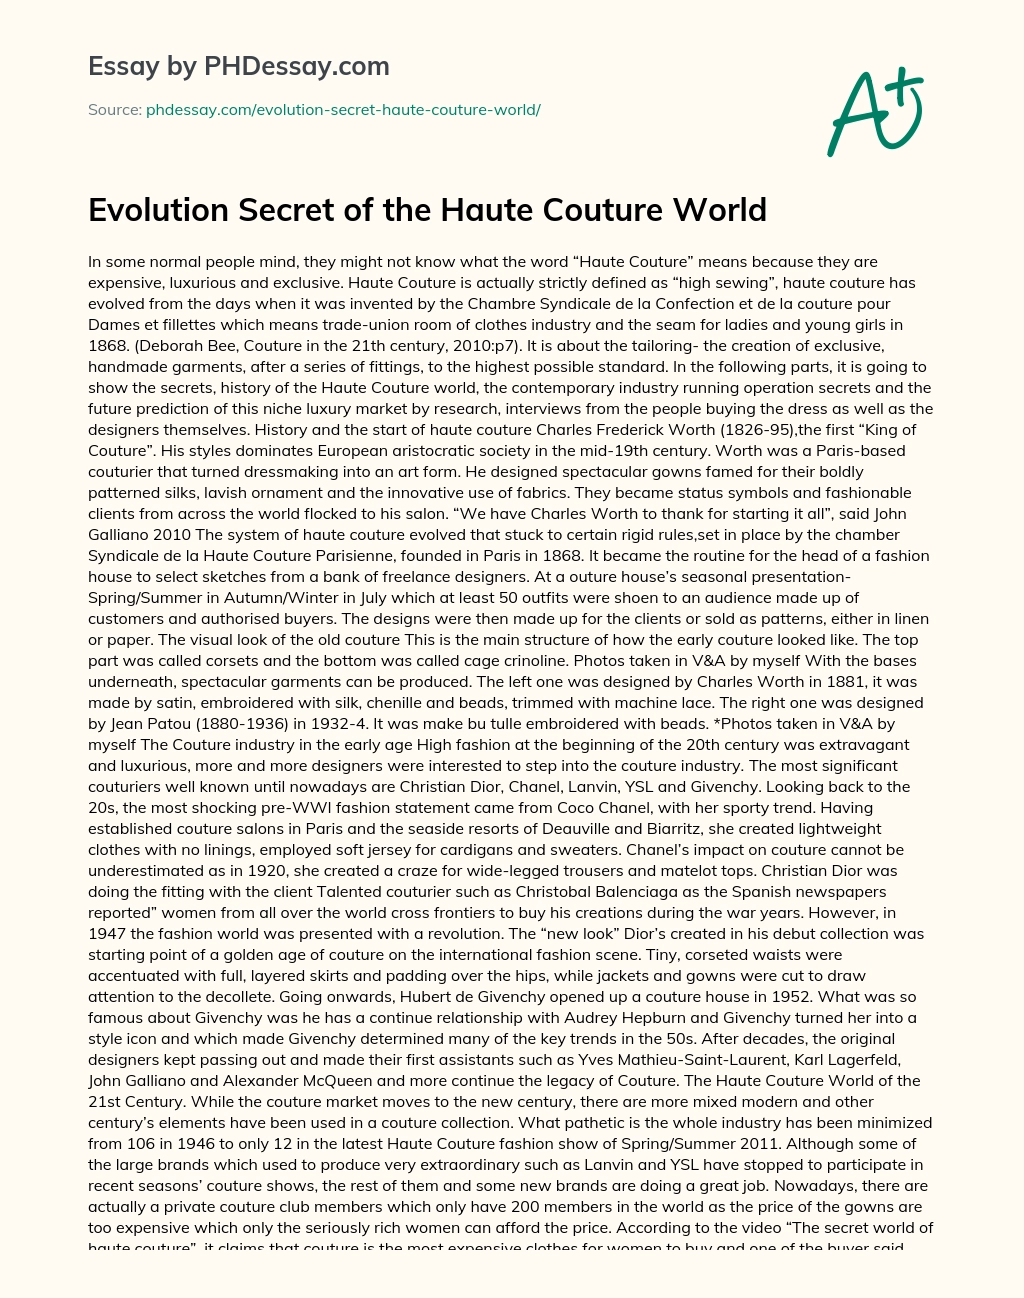 Evolution Secret of the Haute Couture World essay